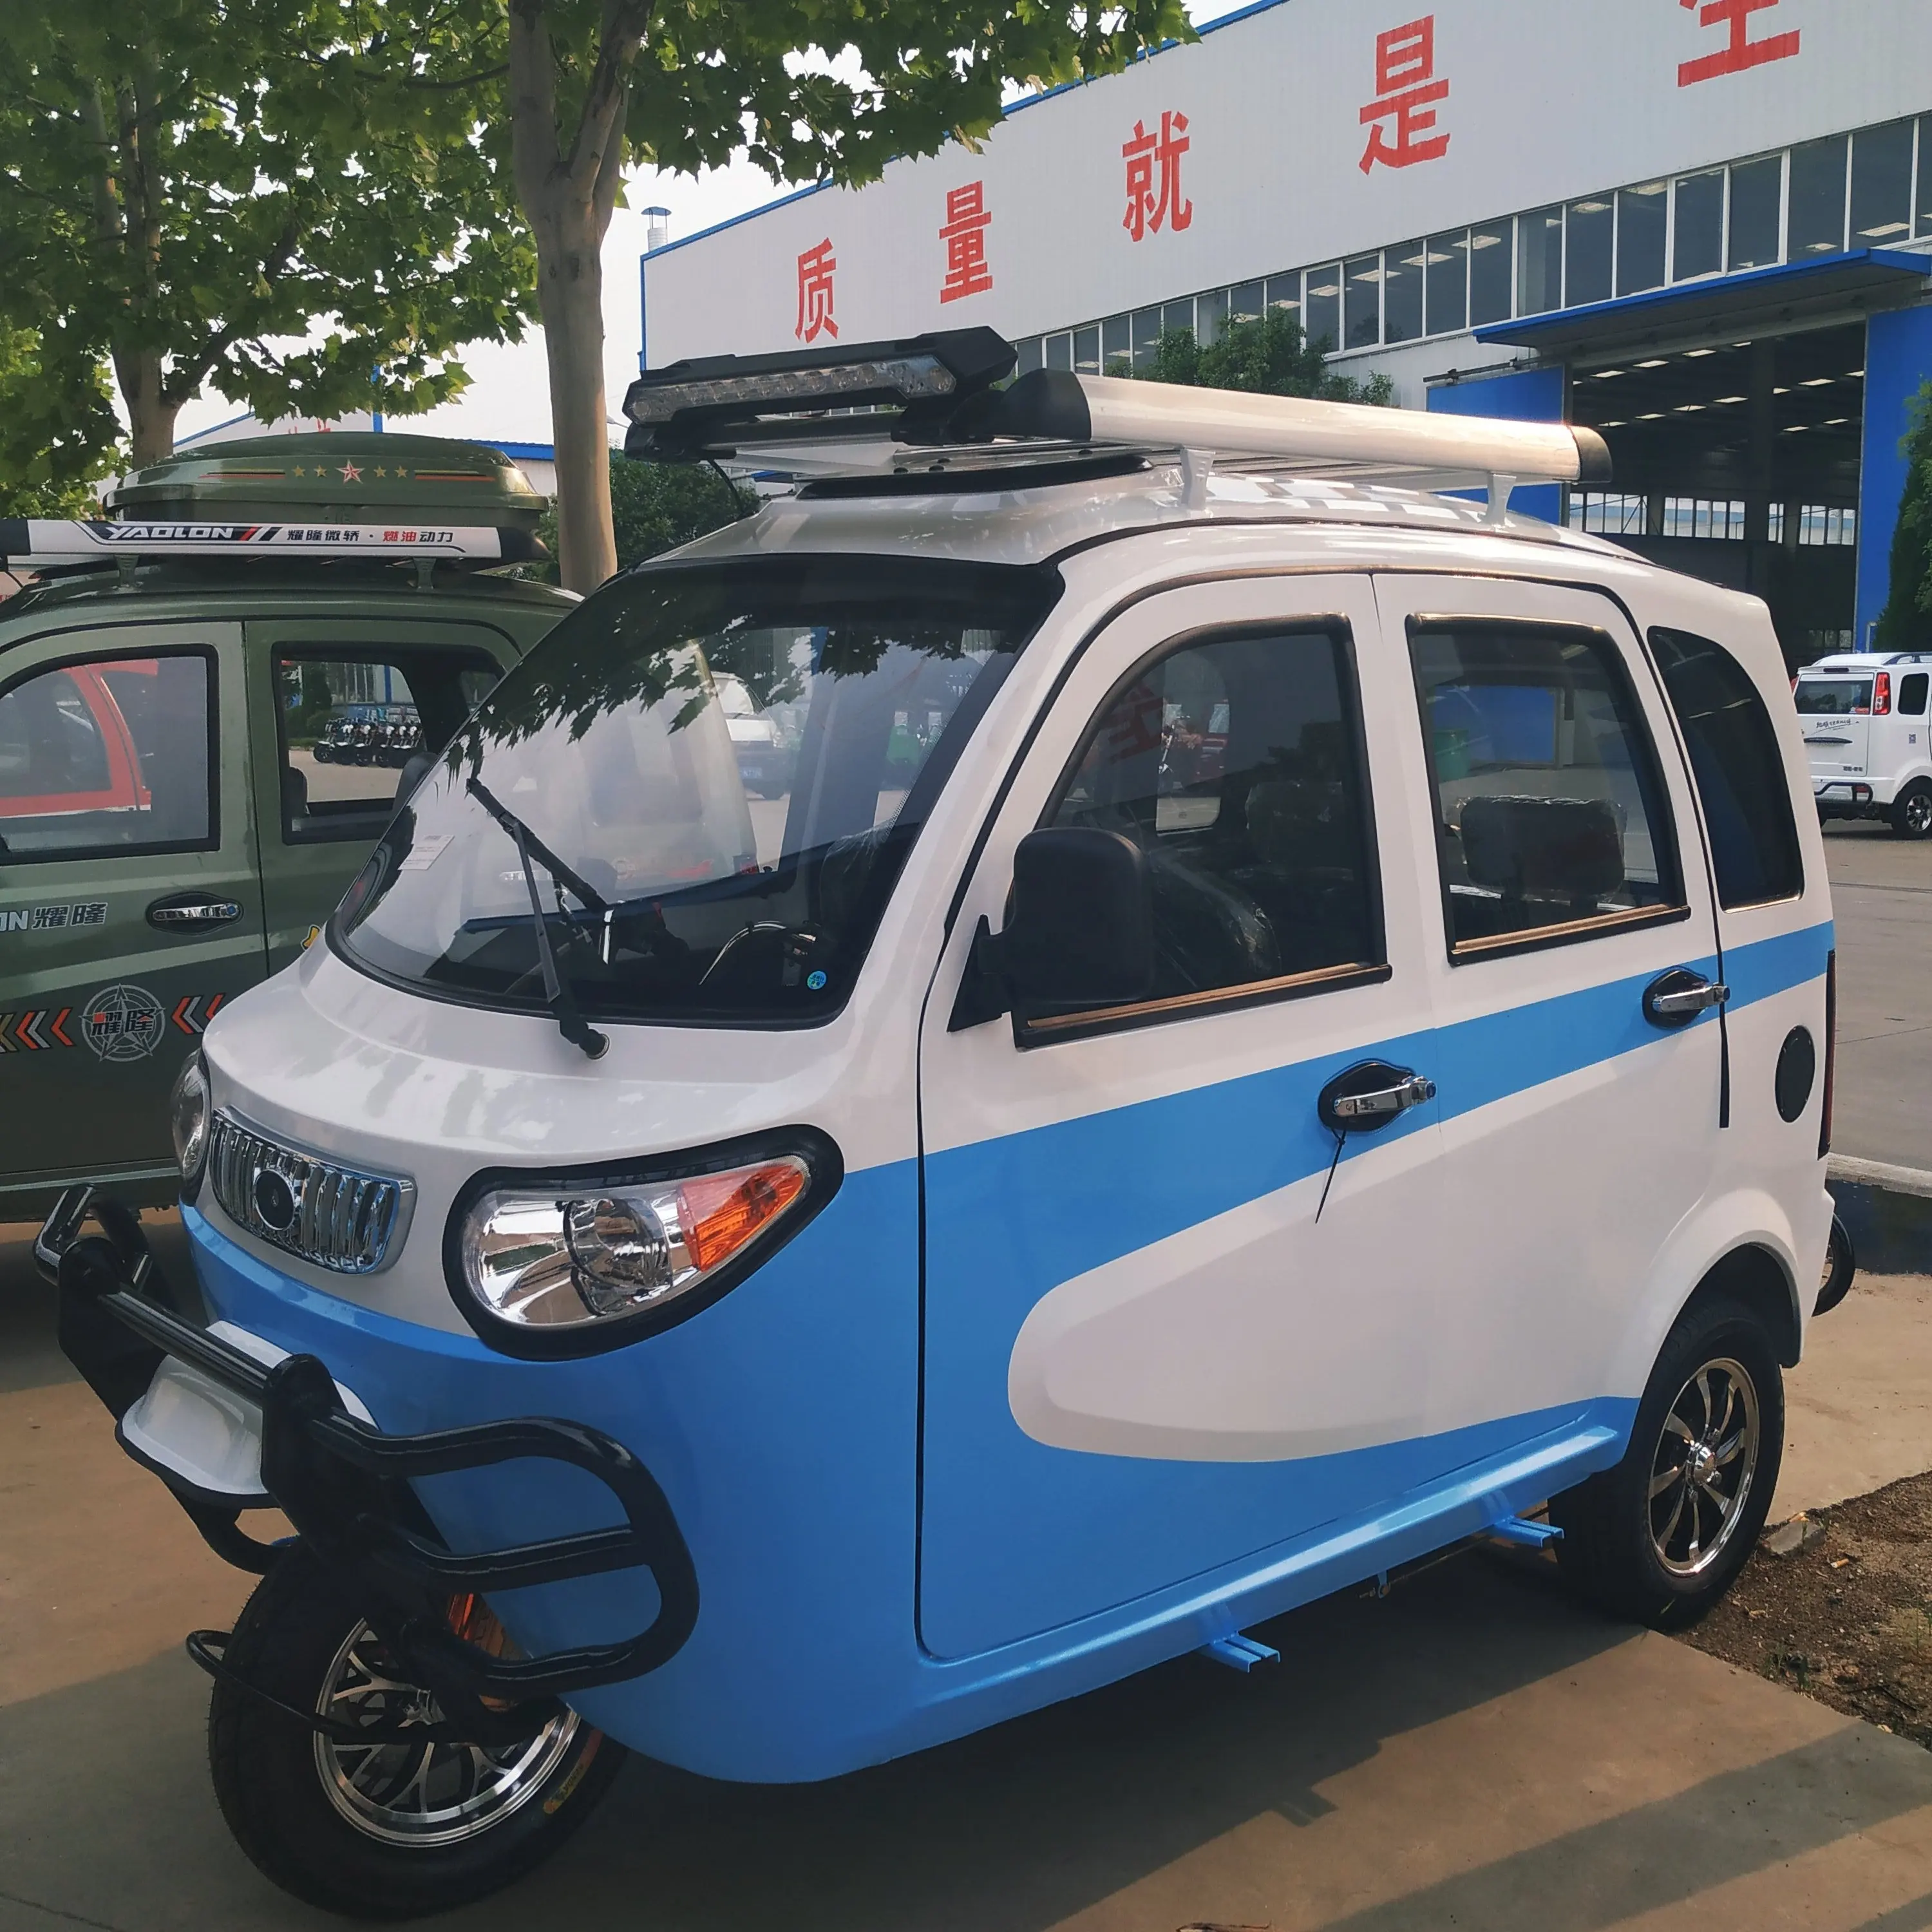 गर्म बेच चीन YAOLON Rrand Mototaxi तीन पहिया यात्री मोटर चालित तिपहिया साइकिल स्टॉक में